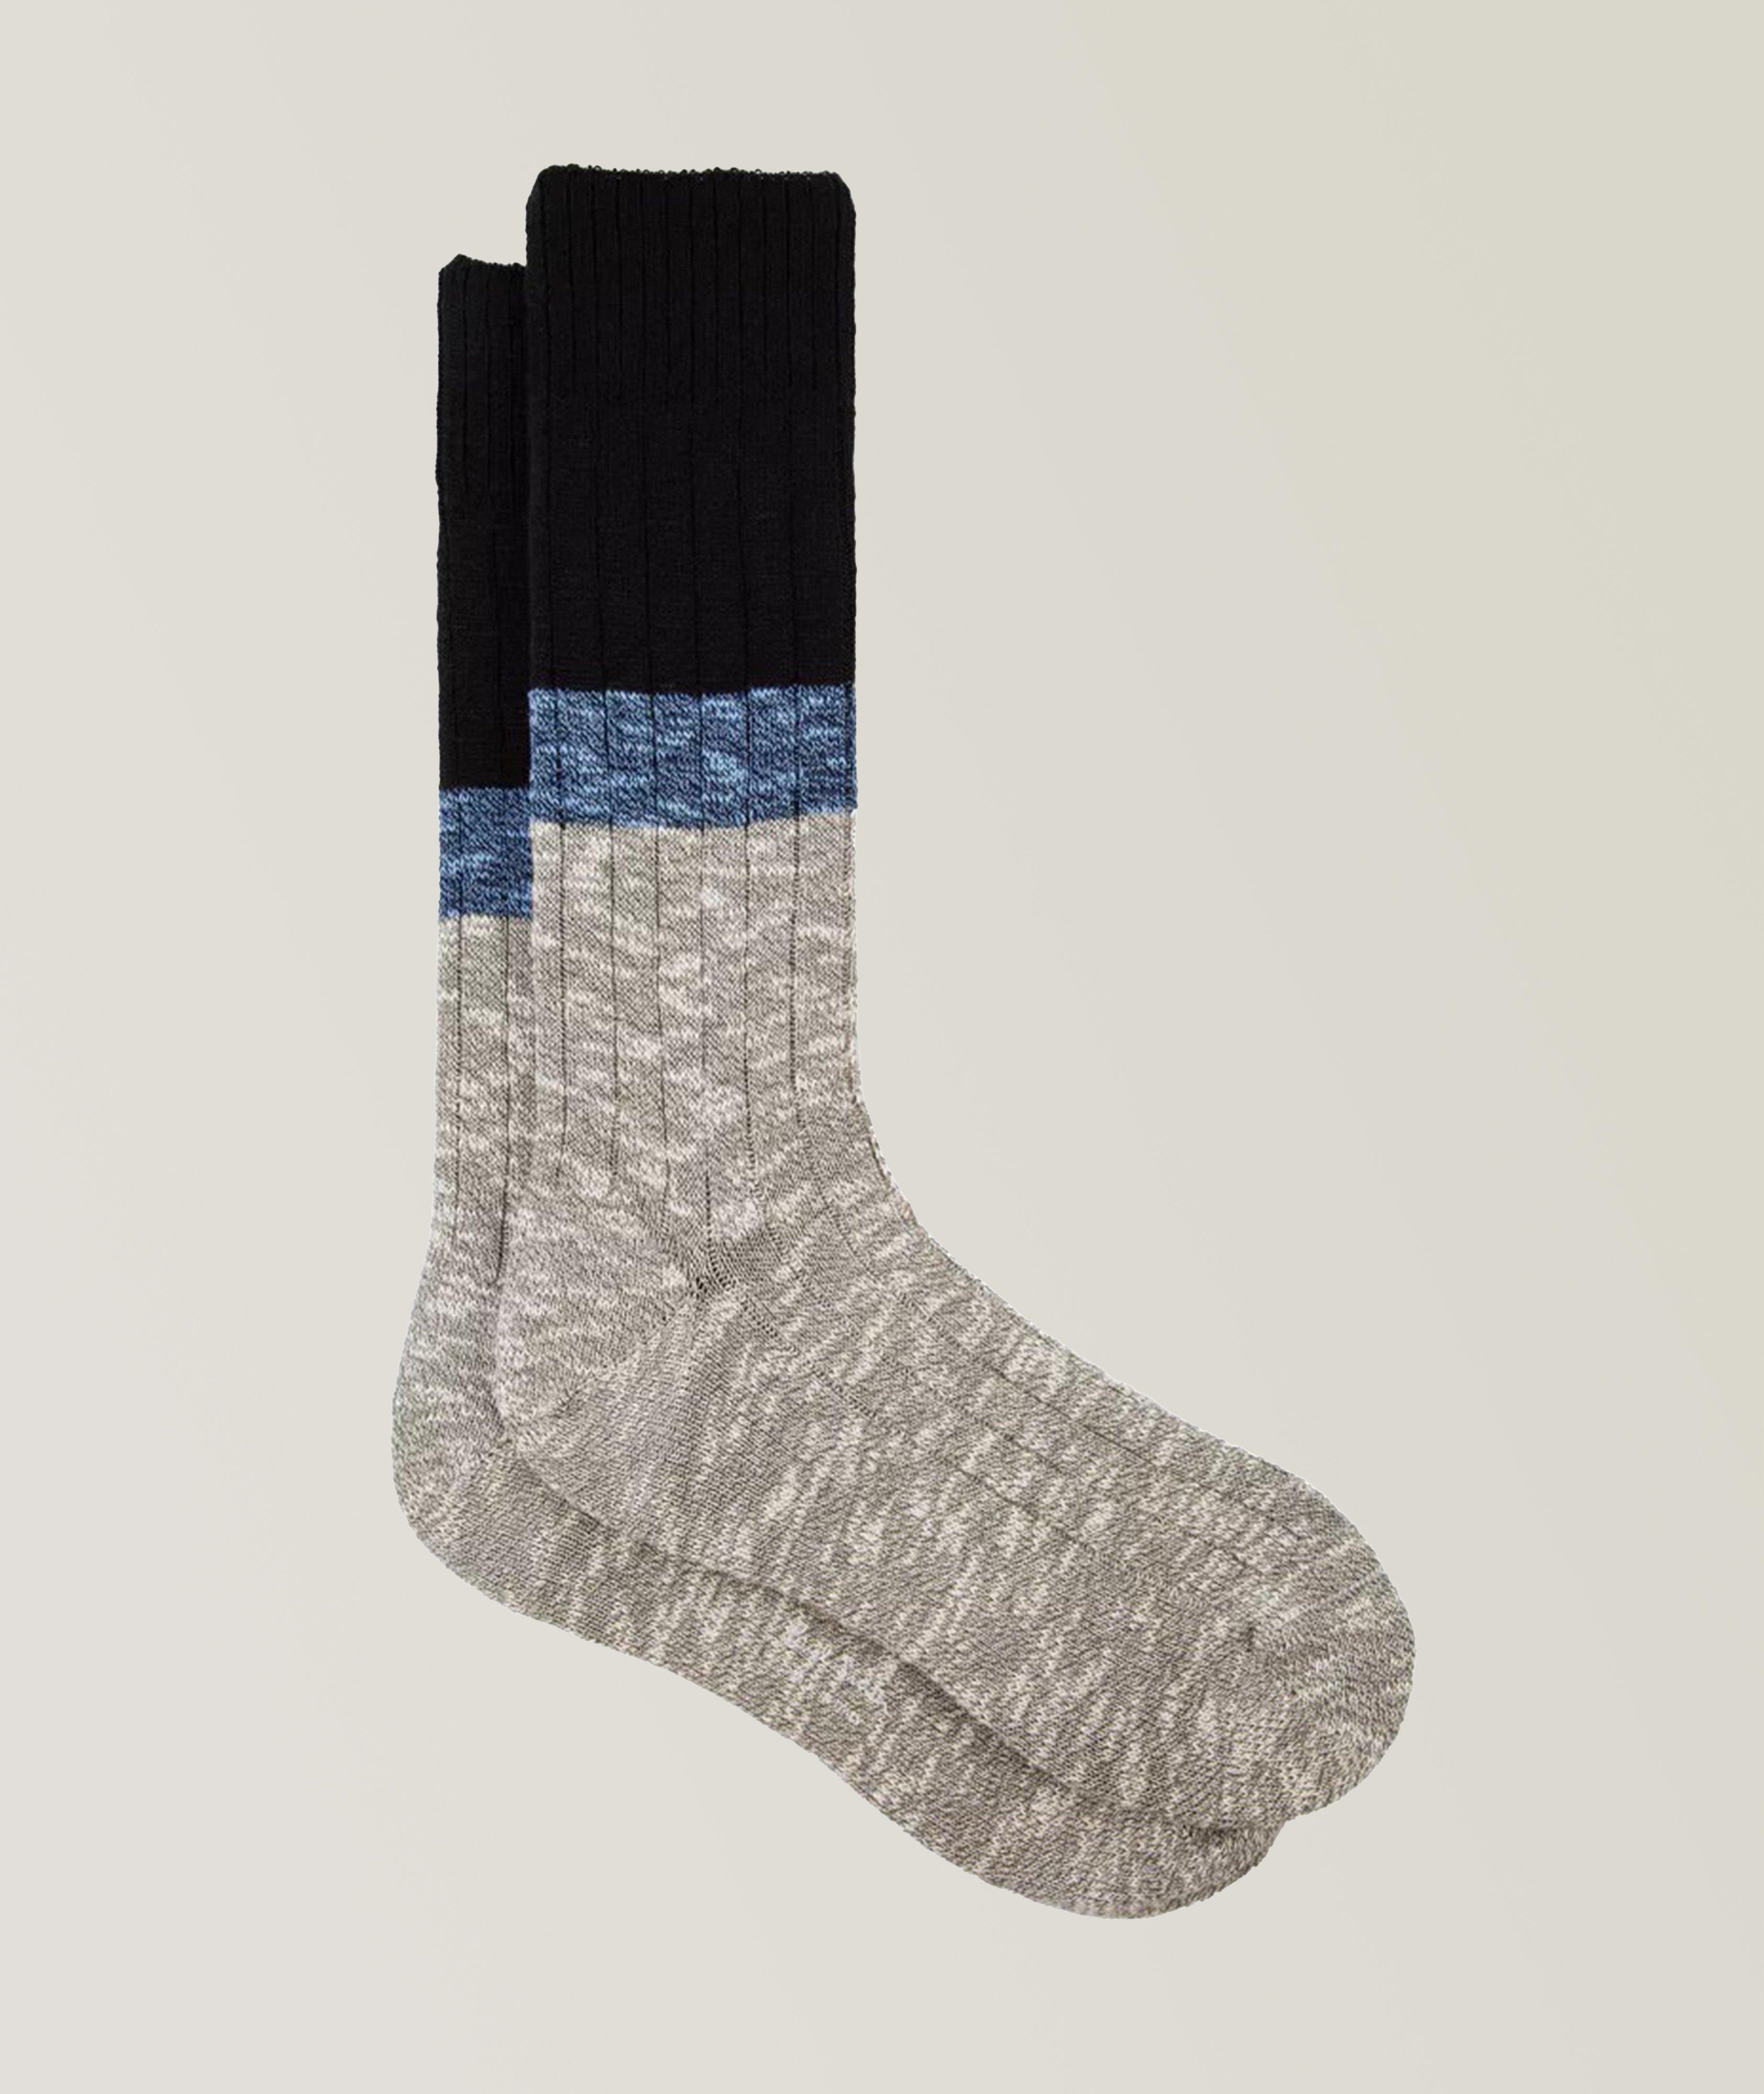 Colourblock Cotton-Blend Socks image 0